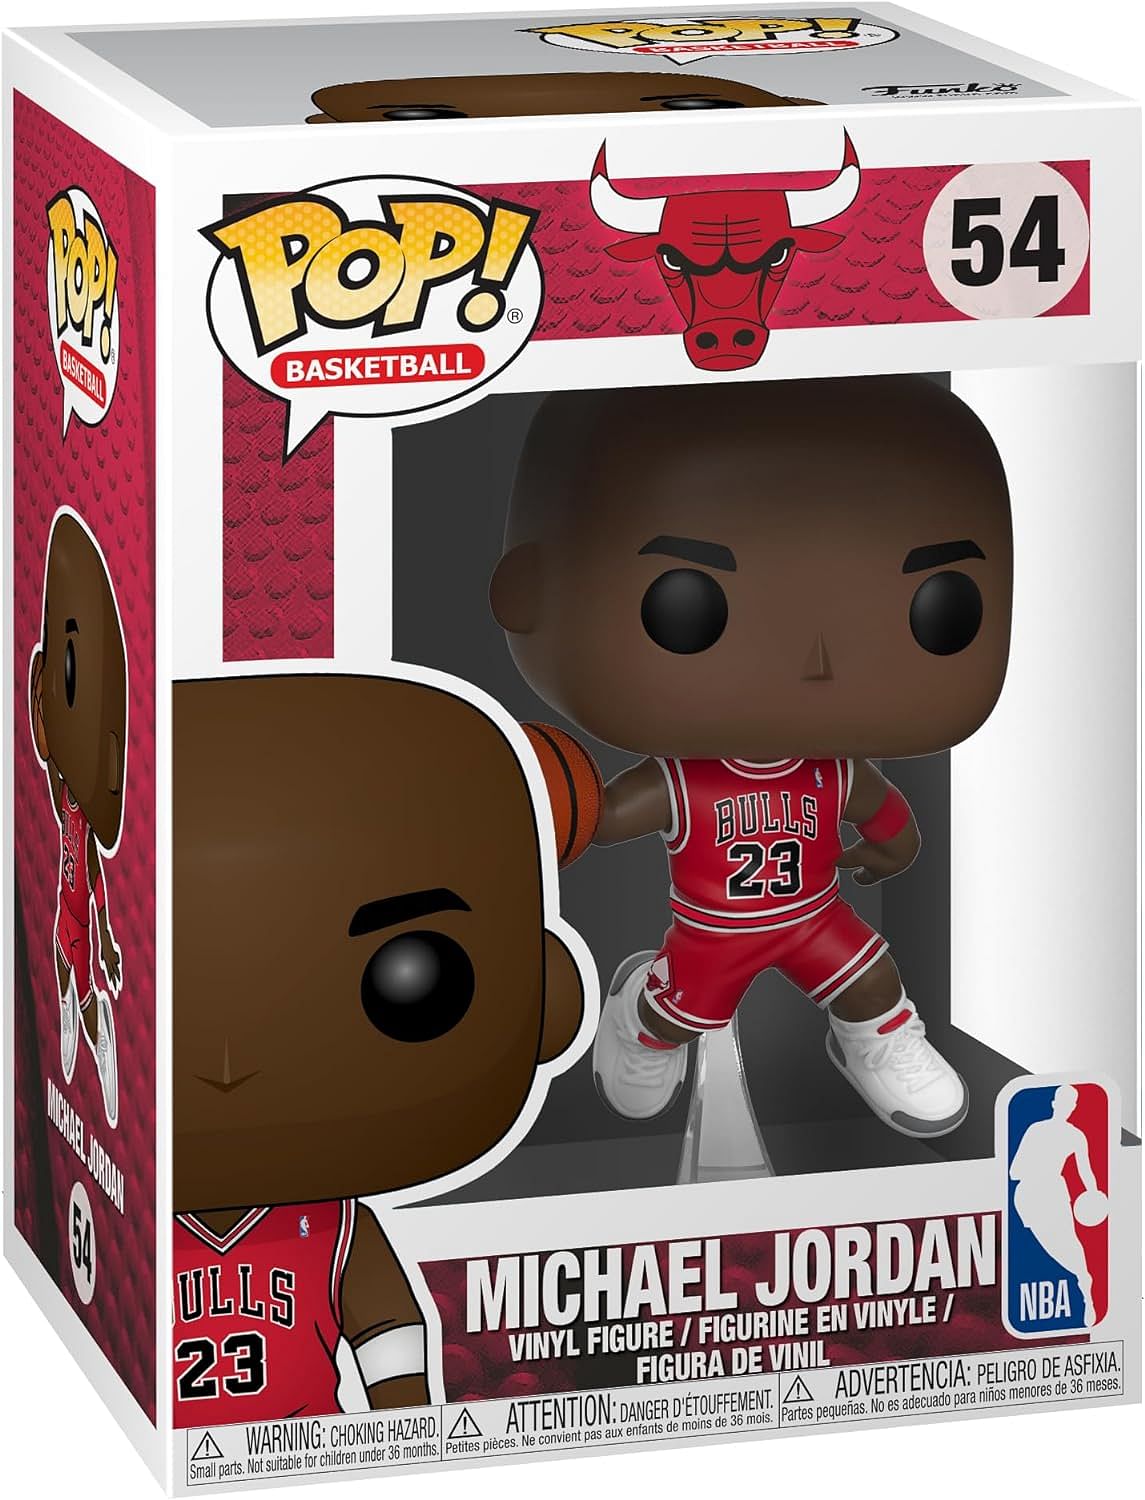 Funko 36890 pop NBA Bulls Michael Jordan, red